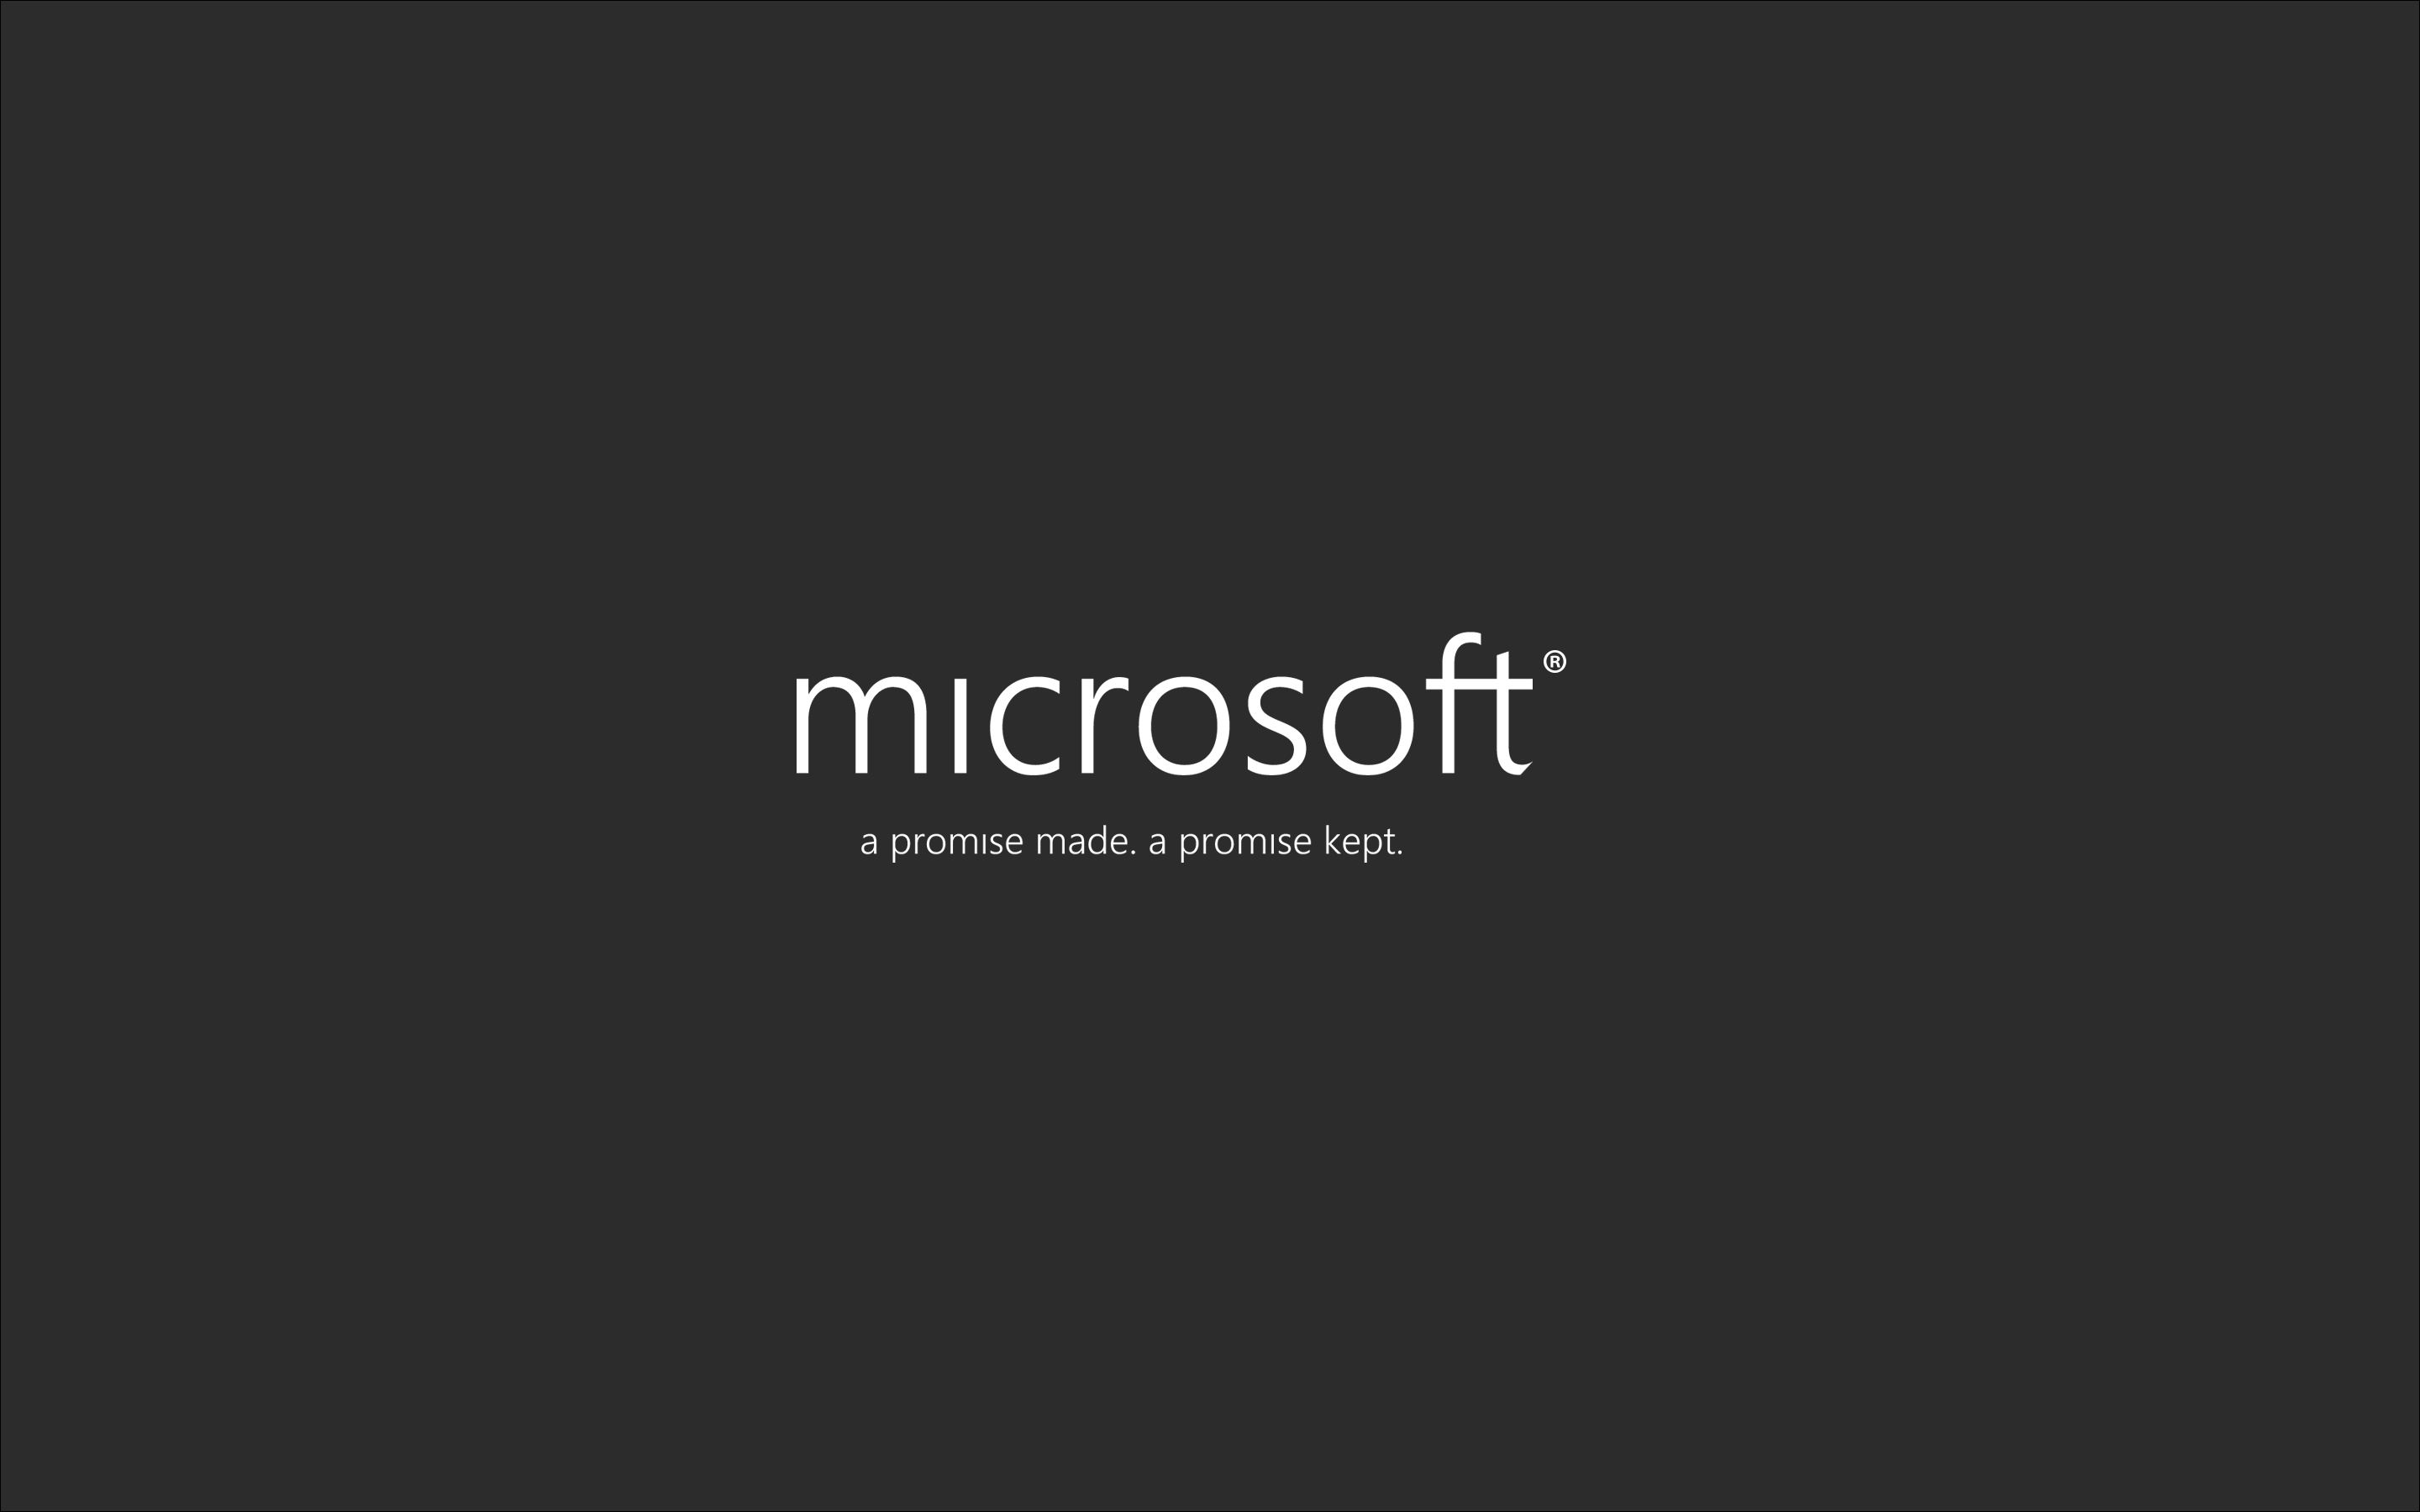 The New Microsoft Logo HD Desktop Mobile Wallpaper Background - 9walls ...